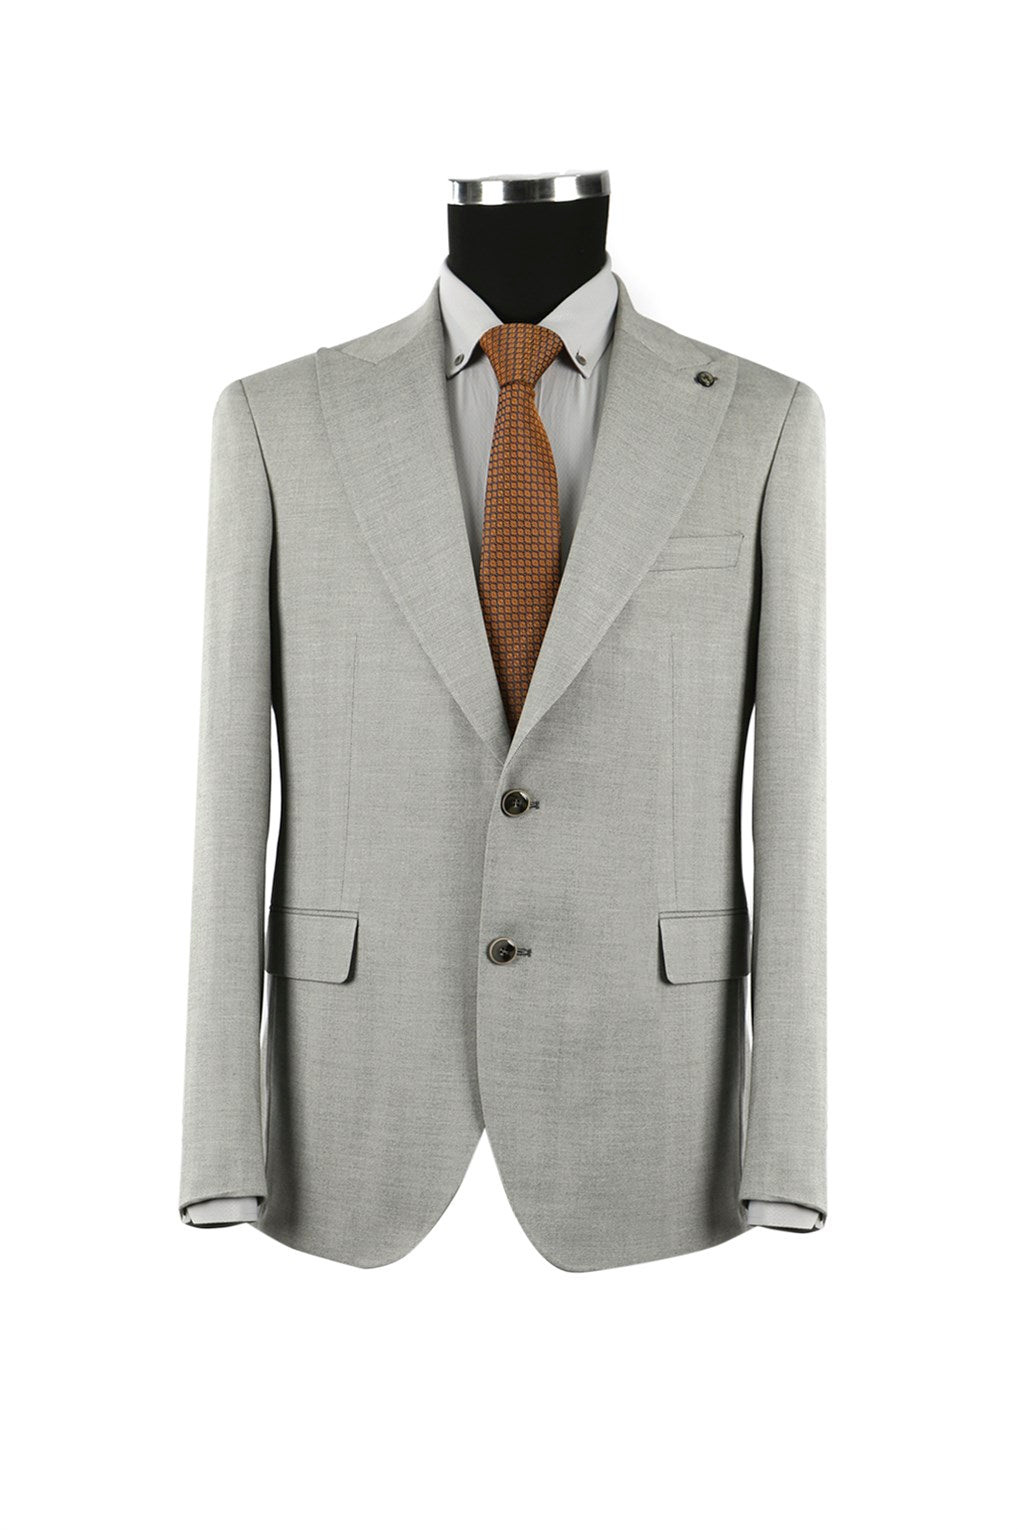 JAKAMEN - Gray Slim Fit Pointed Collar Men's Jacket